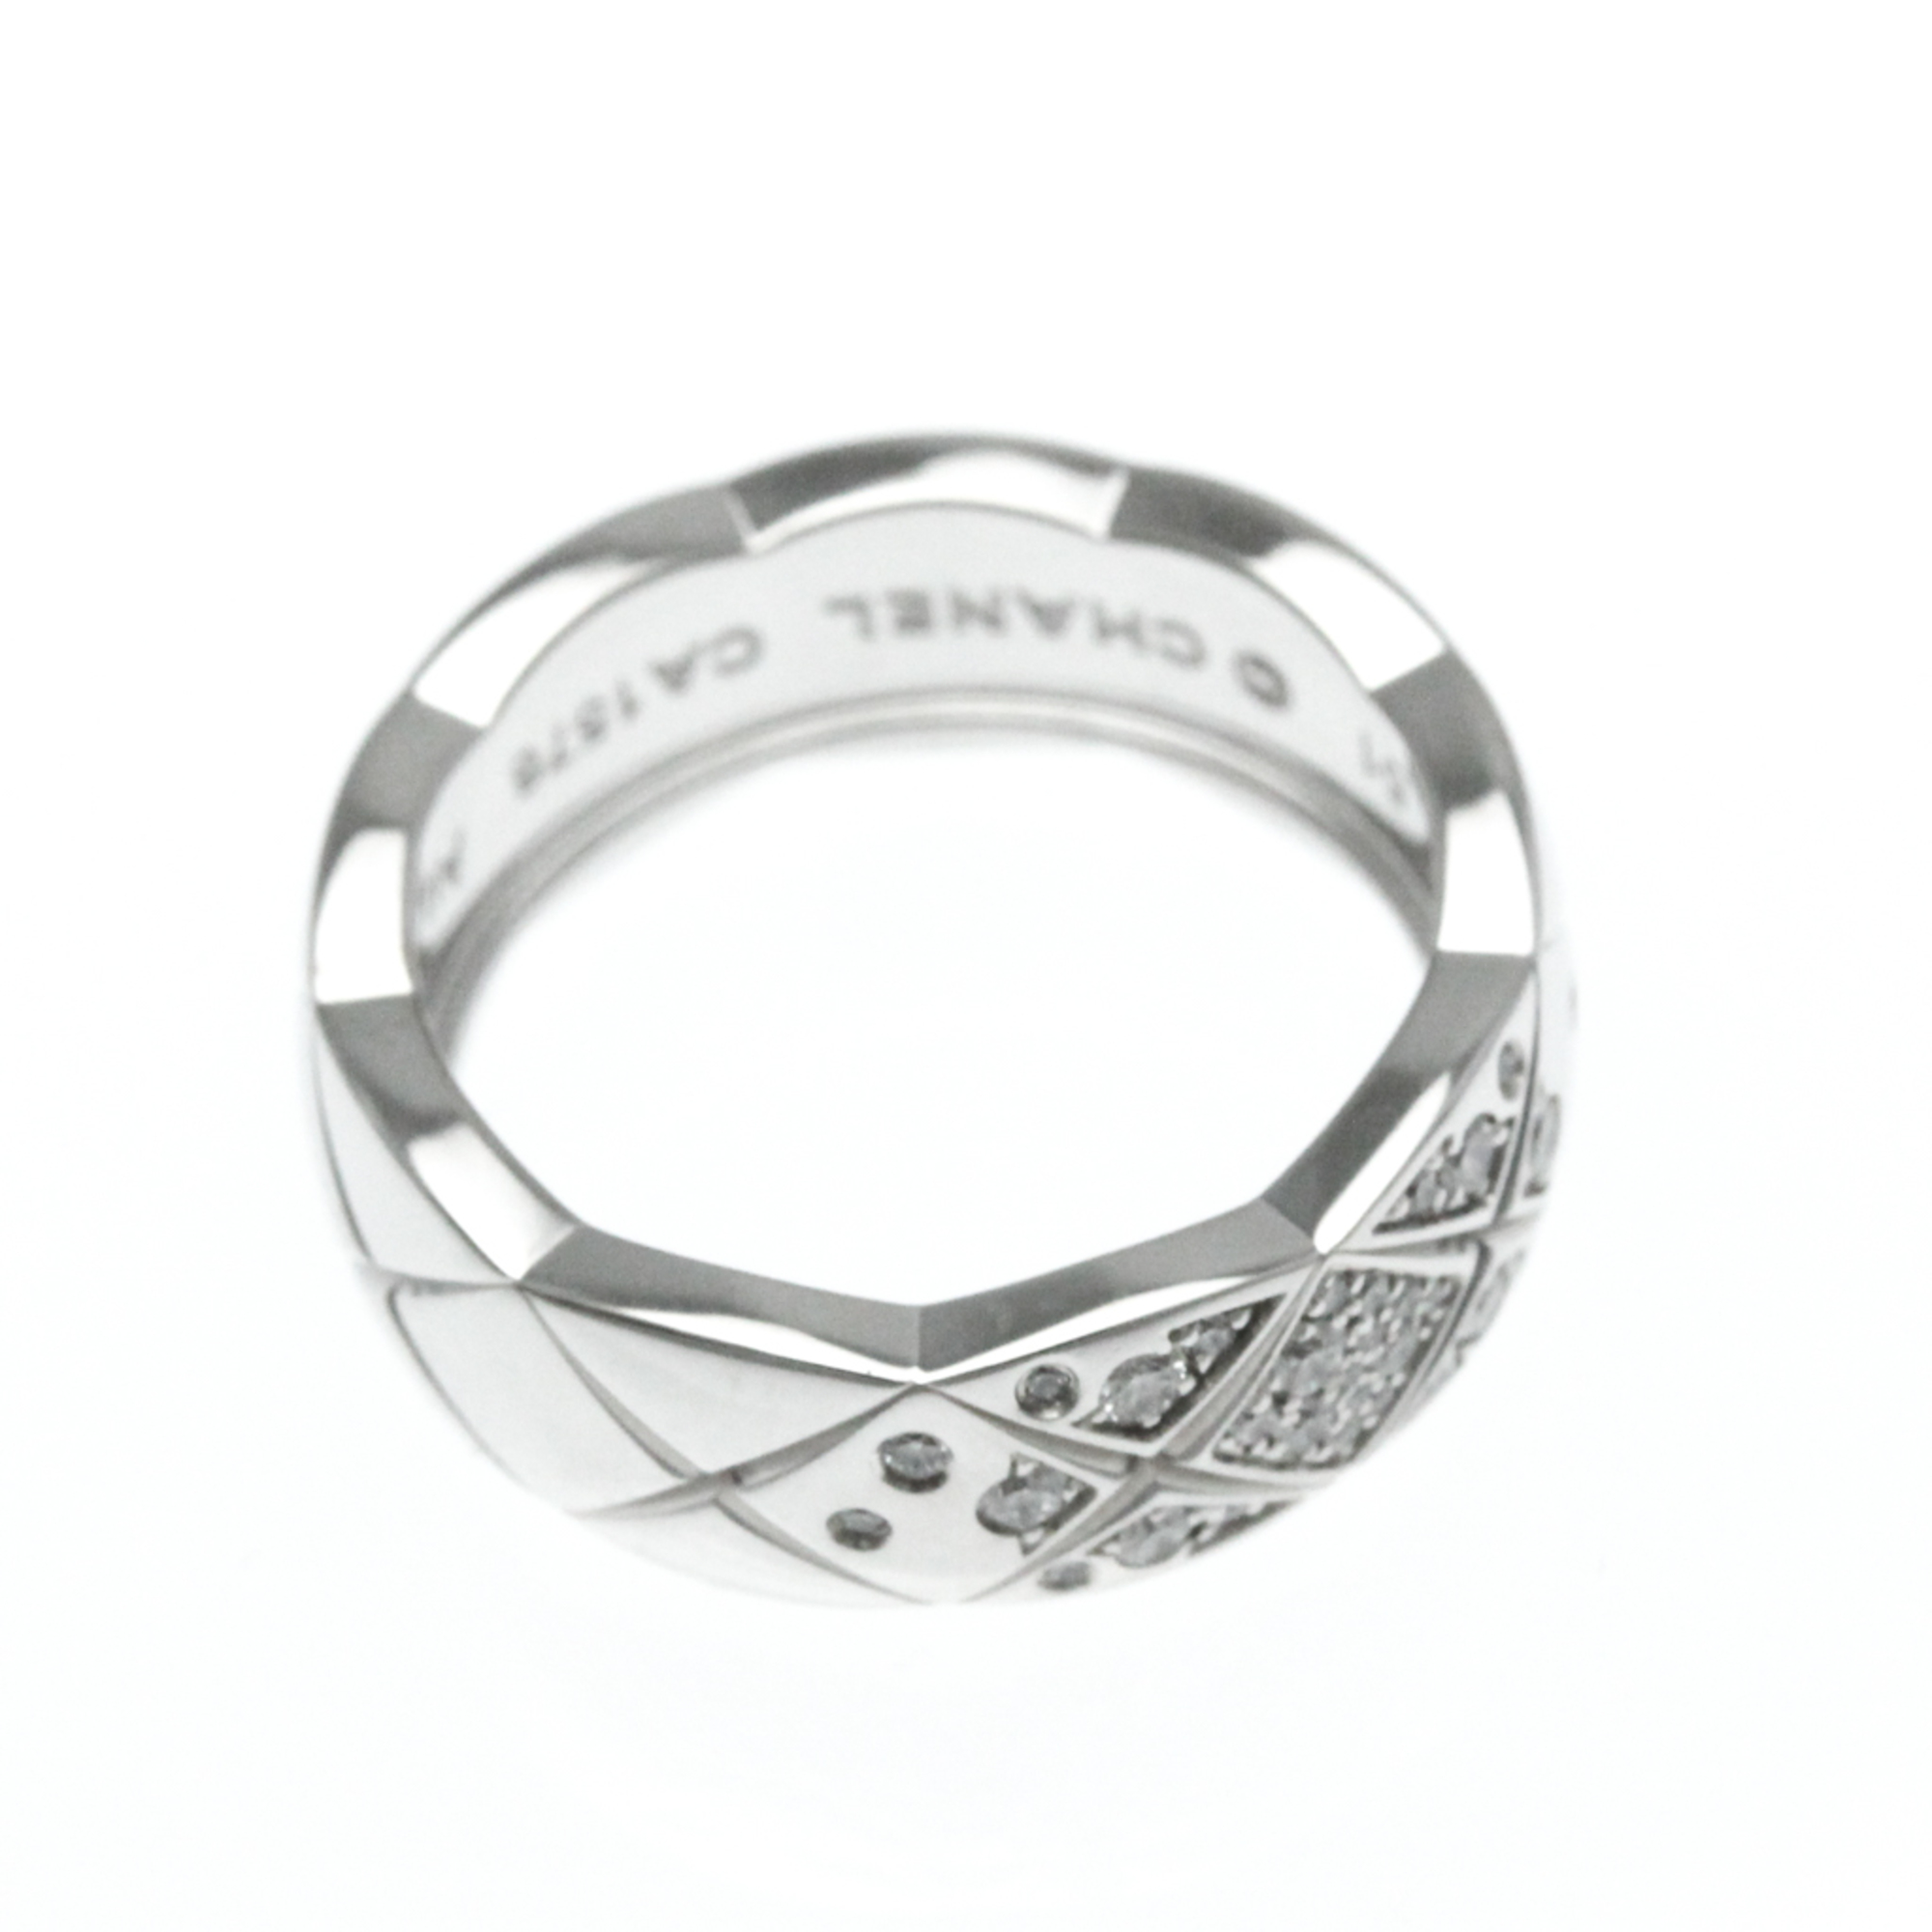 Chanel Coco Crush Ring Medium Size Diamond J10865 White Gold (18K) Fashion Diamond Band Ring Carat/0.18 Silver